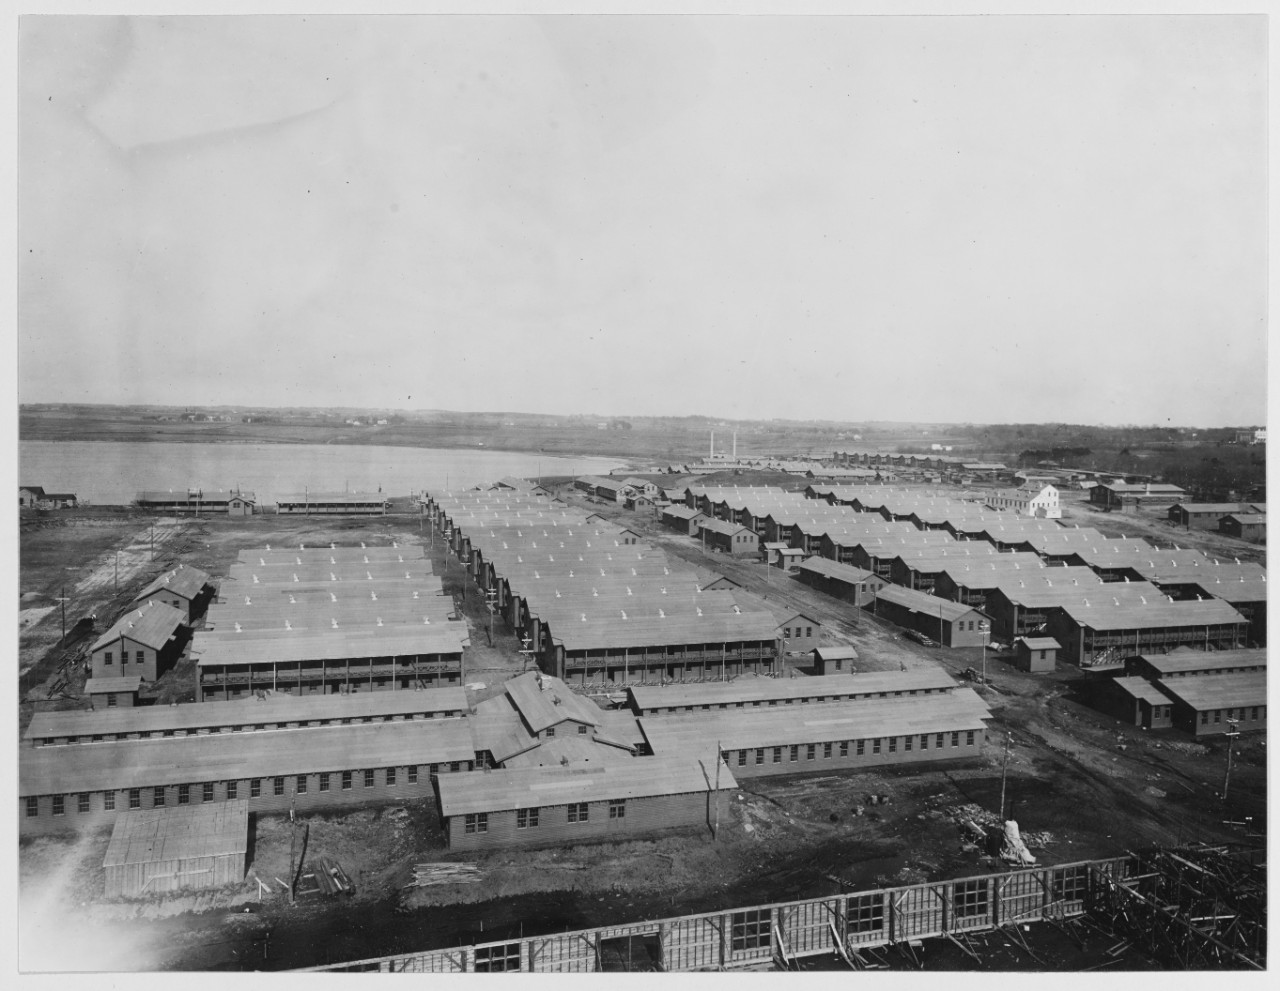 Coddington point Annex. Naval Training Station, Newport, R.I.